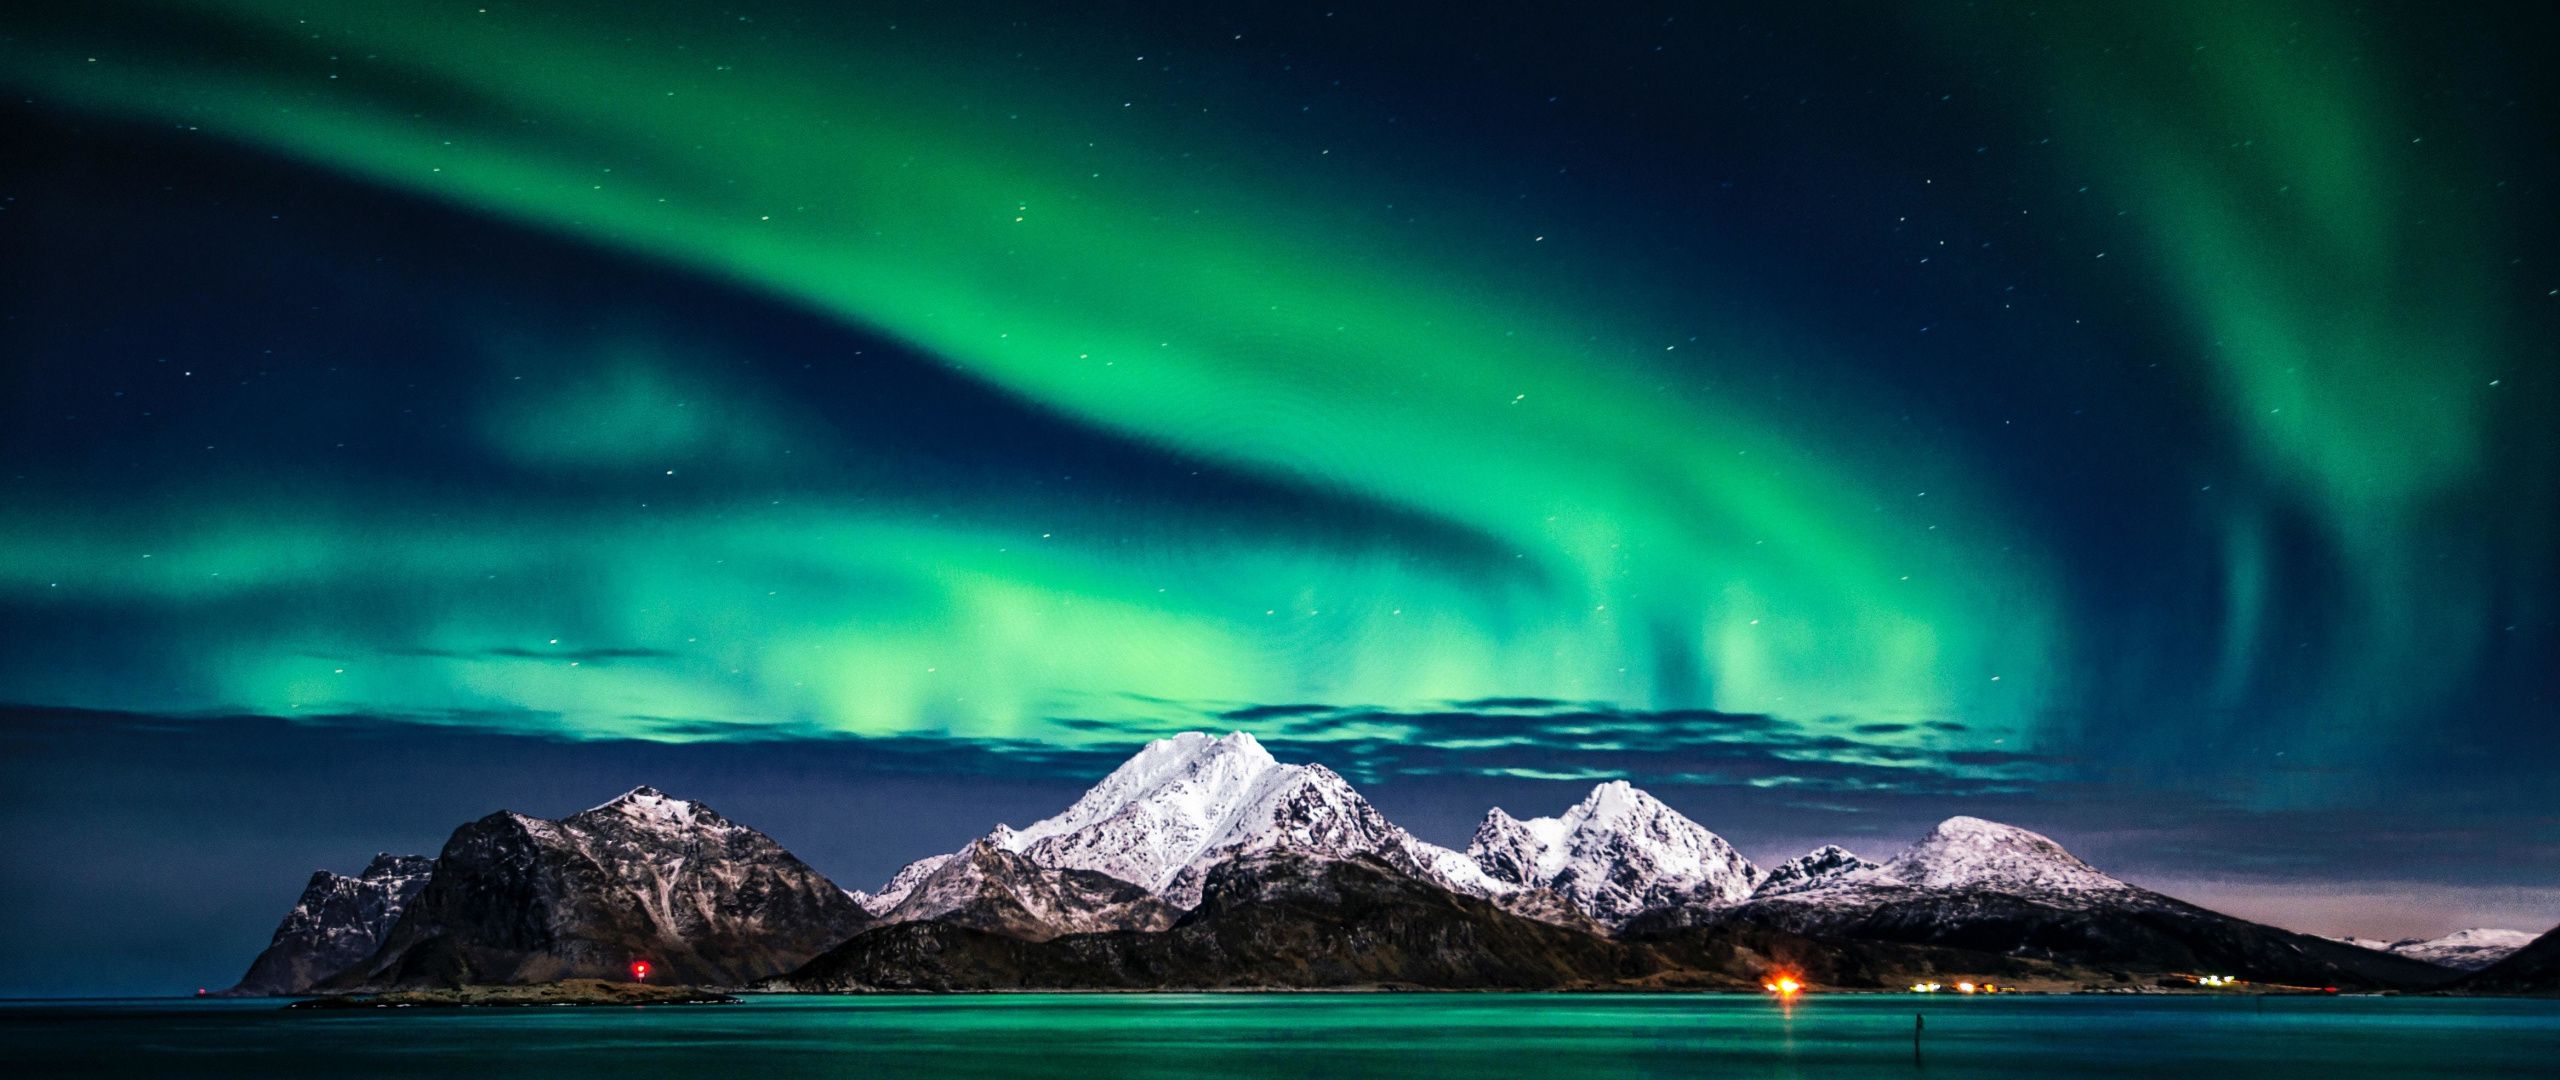 Download 2560x1080 wallpaper aurora borealis, green lights, sky